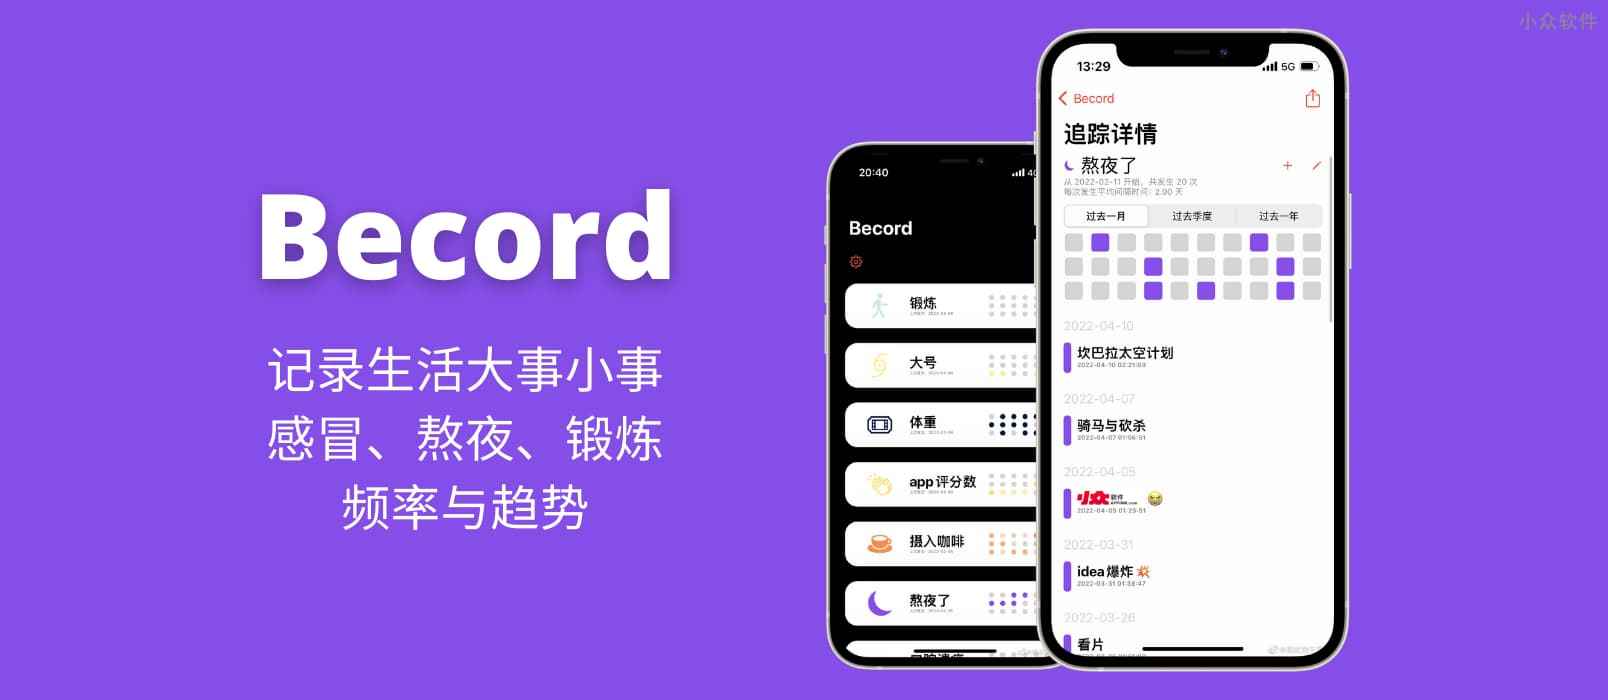 Becord – 记录生活大事小事：感冒、熬夜、锻炼的频率与趋势[iPhone]